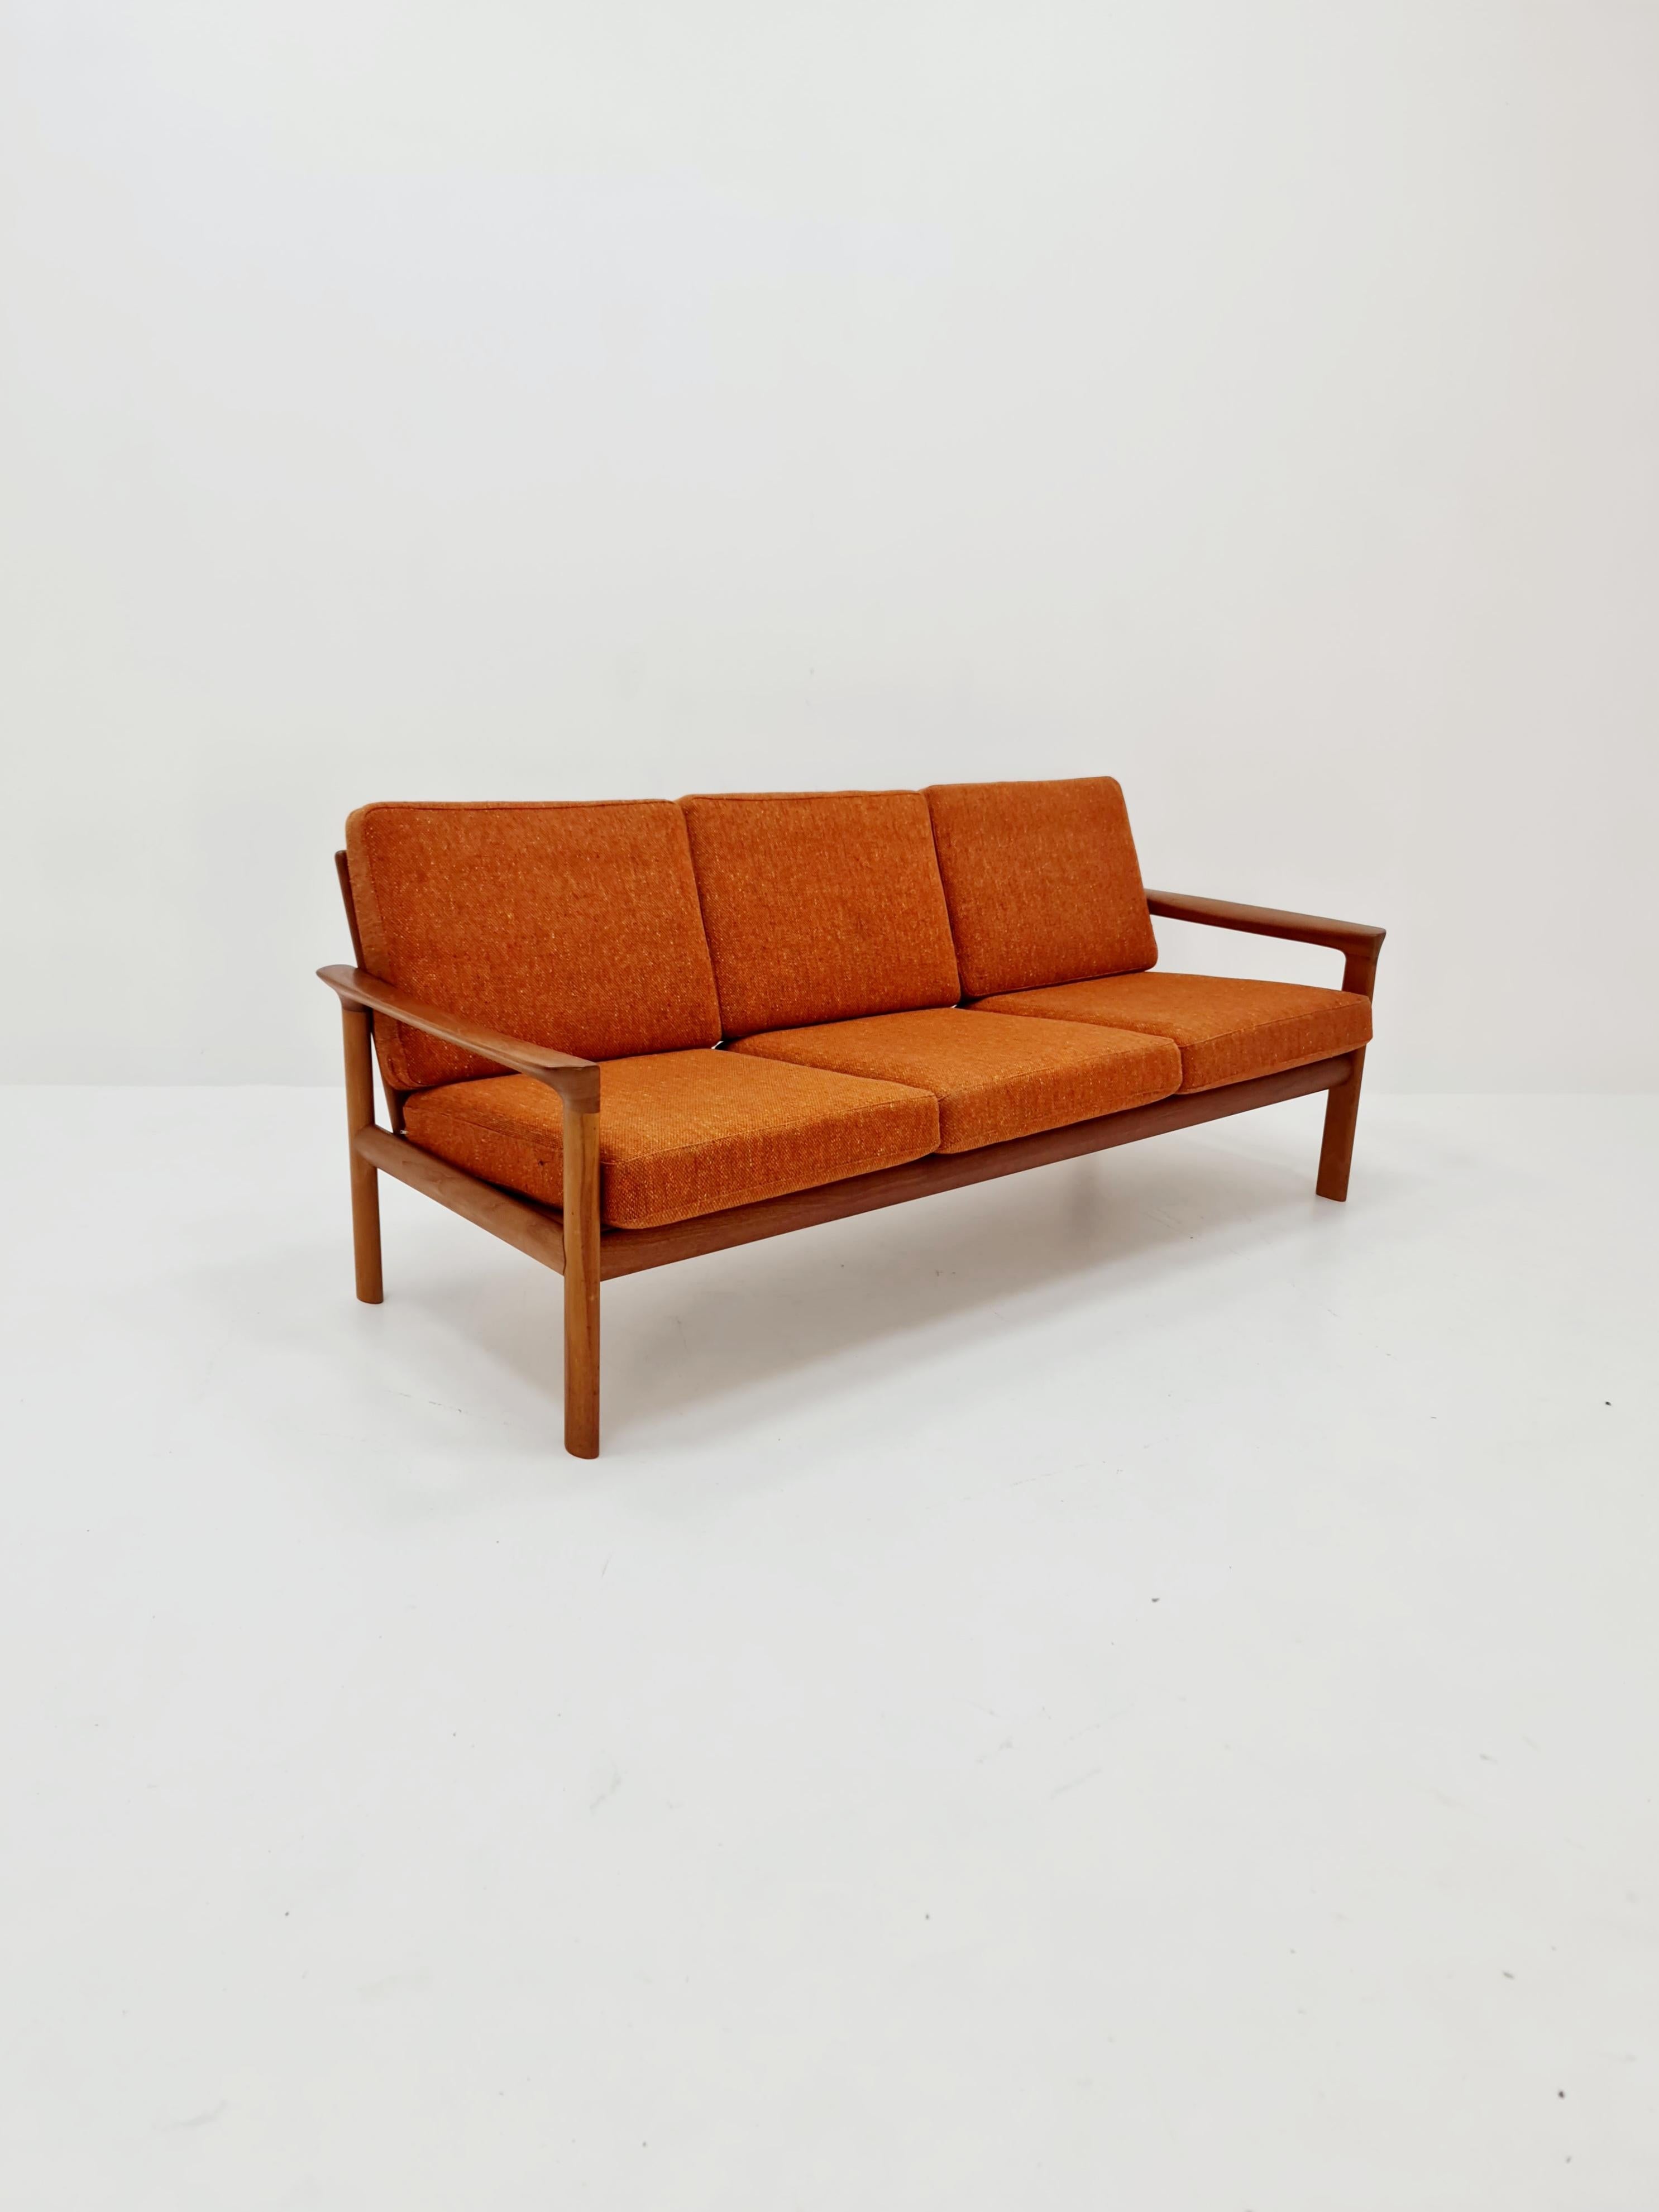 Mid century easy lounge couch by Sven ellekaer for komfort teak  1